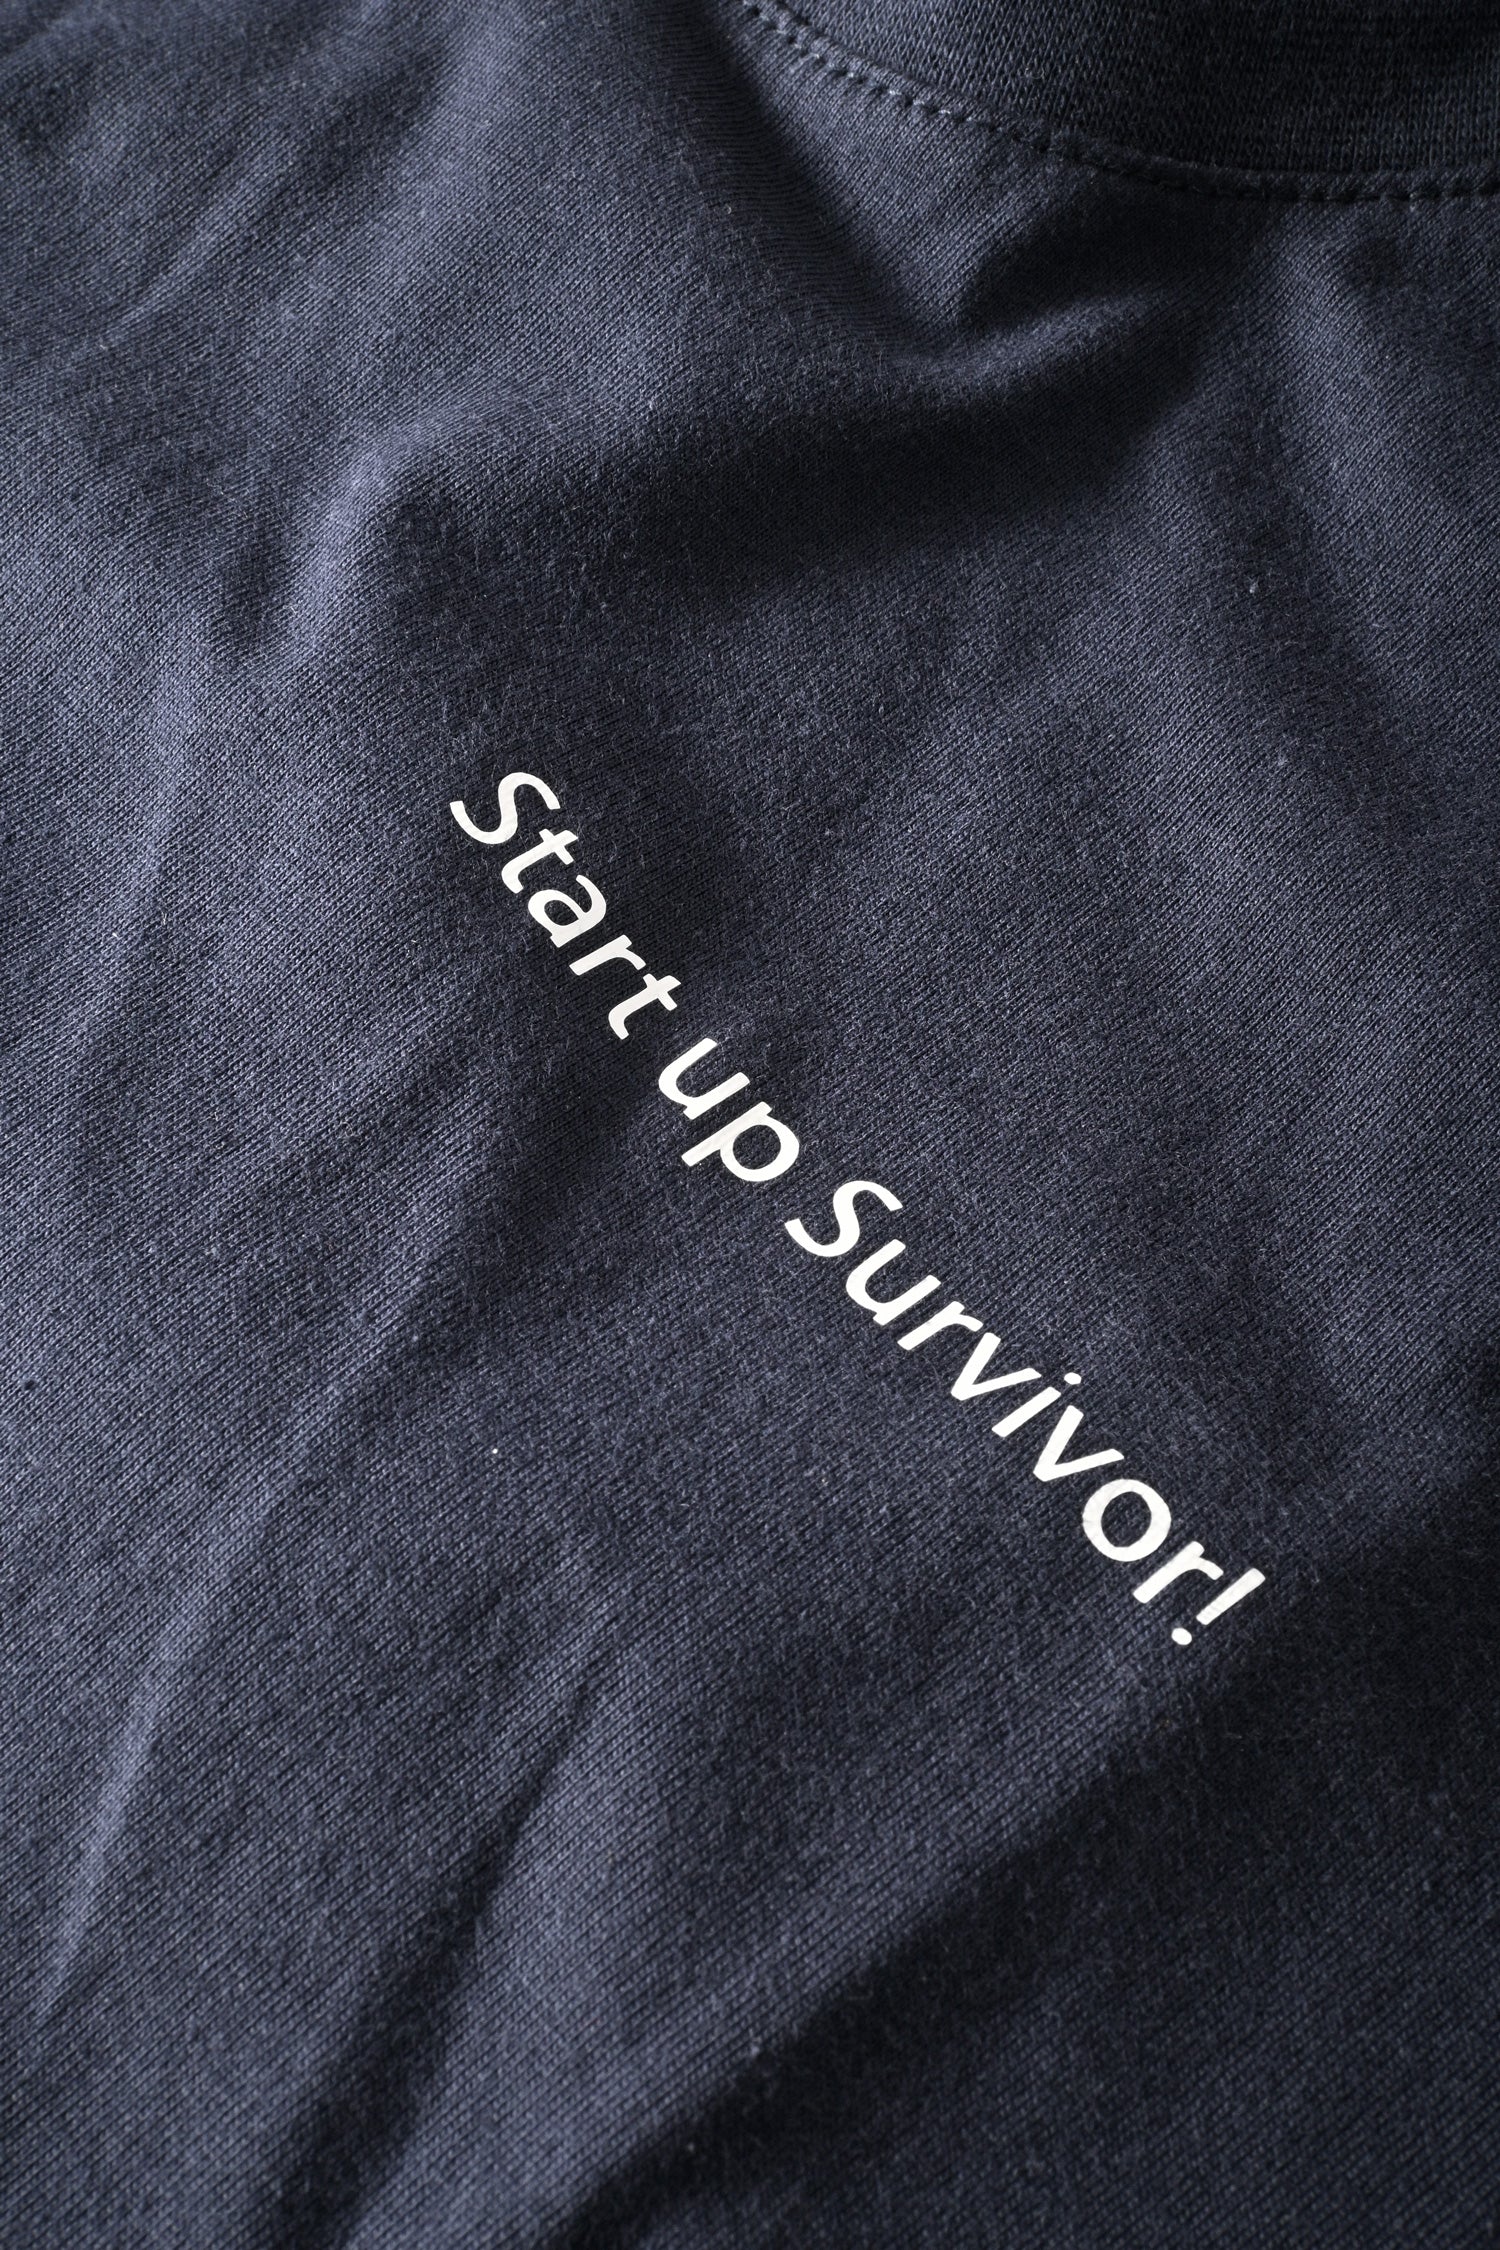 Men's Start Up Survivor Printed Crew Neck Tee Shirt